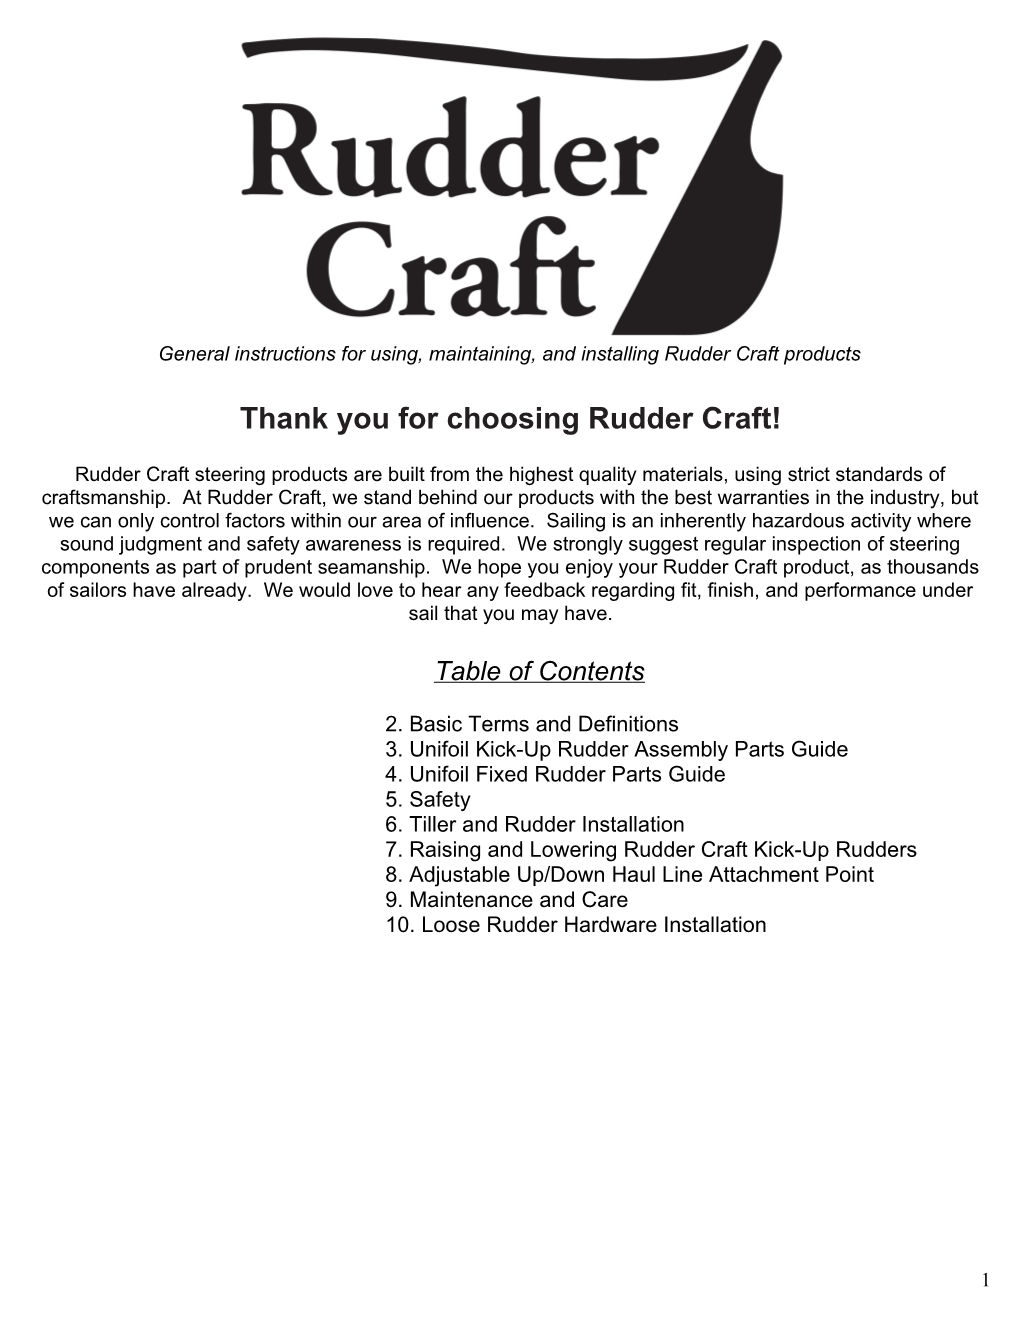 Thank You for Choosing Rudder Craft!